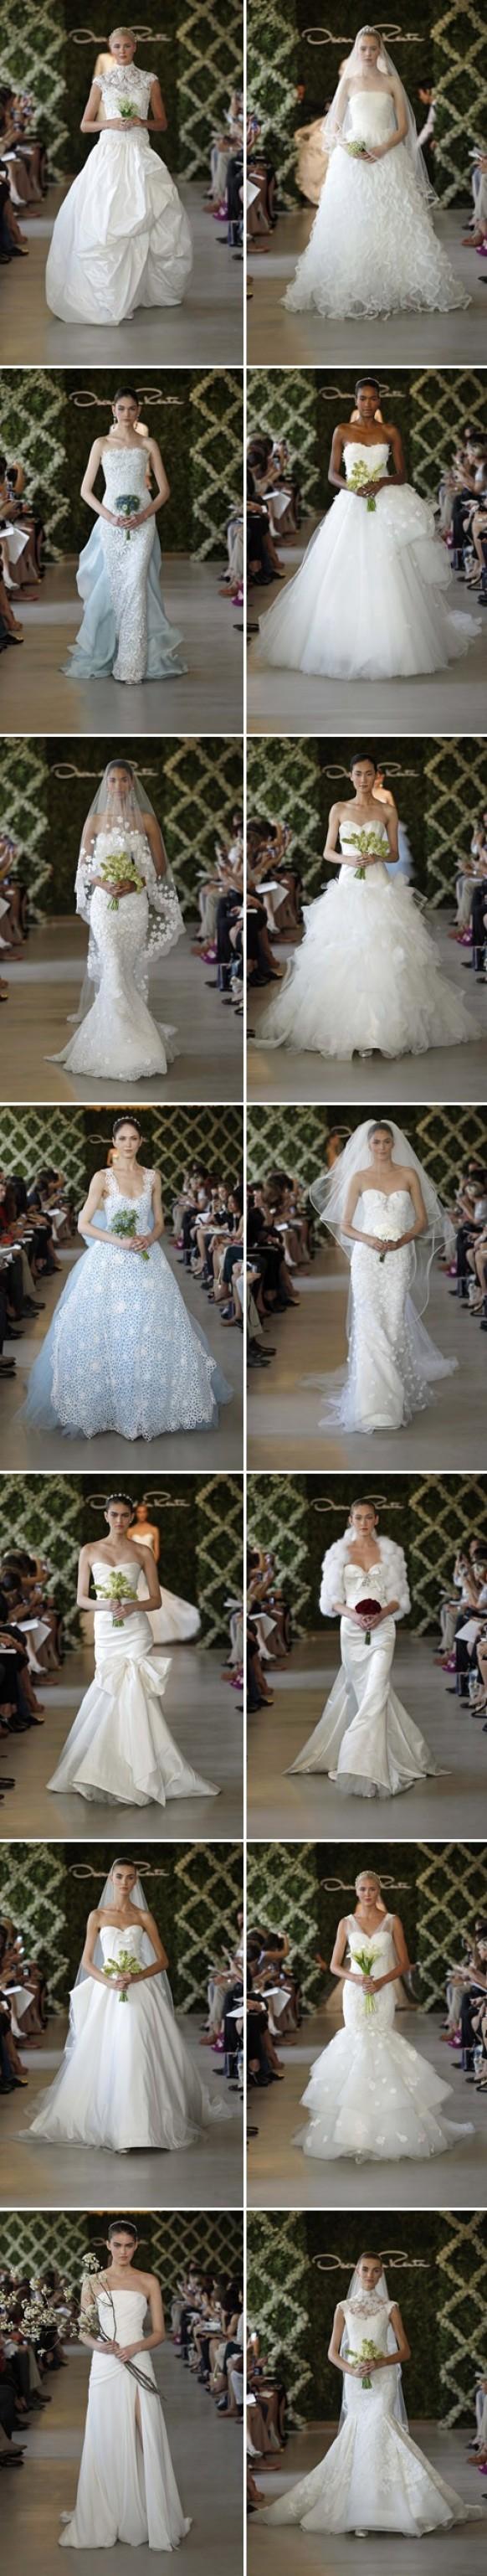 wedding photo - 2013 Robes de mariée ♥ Oscar De La Renta spéciales robes de mariée de conception